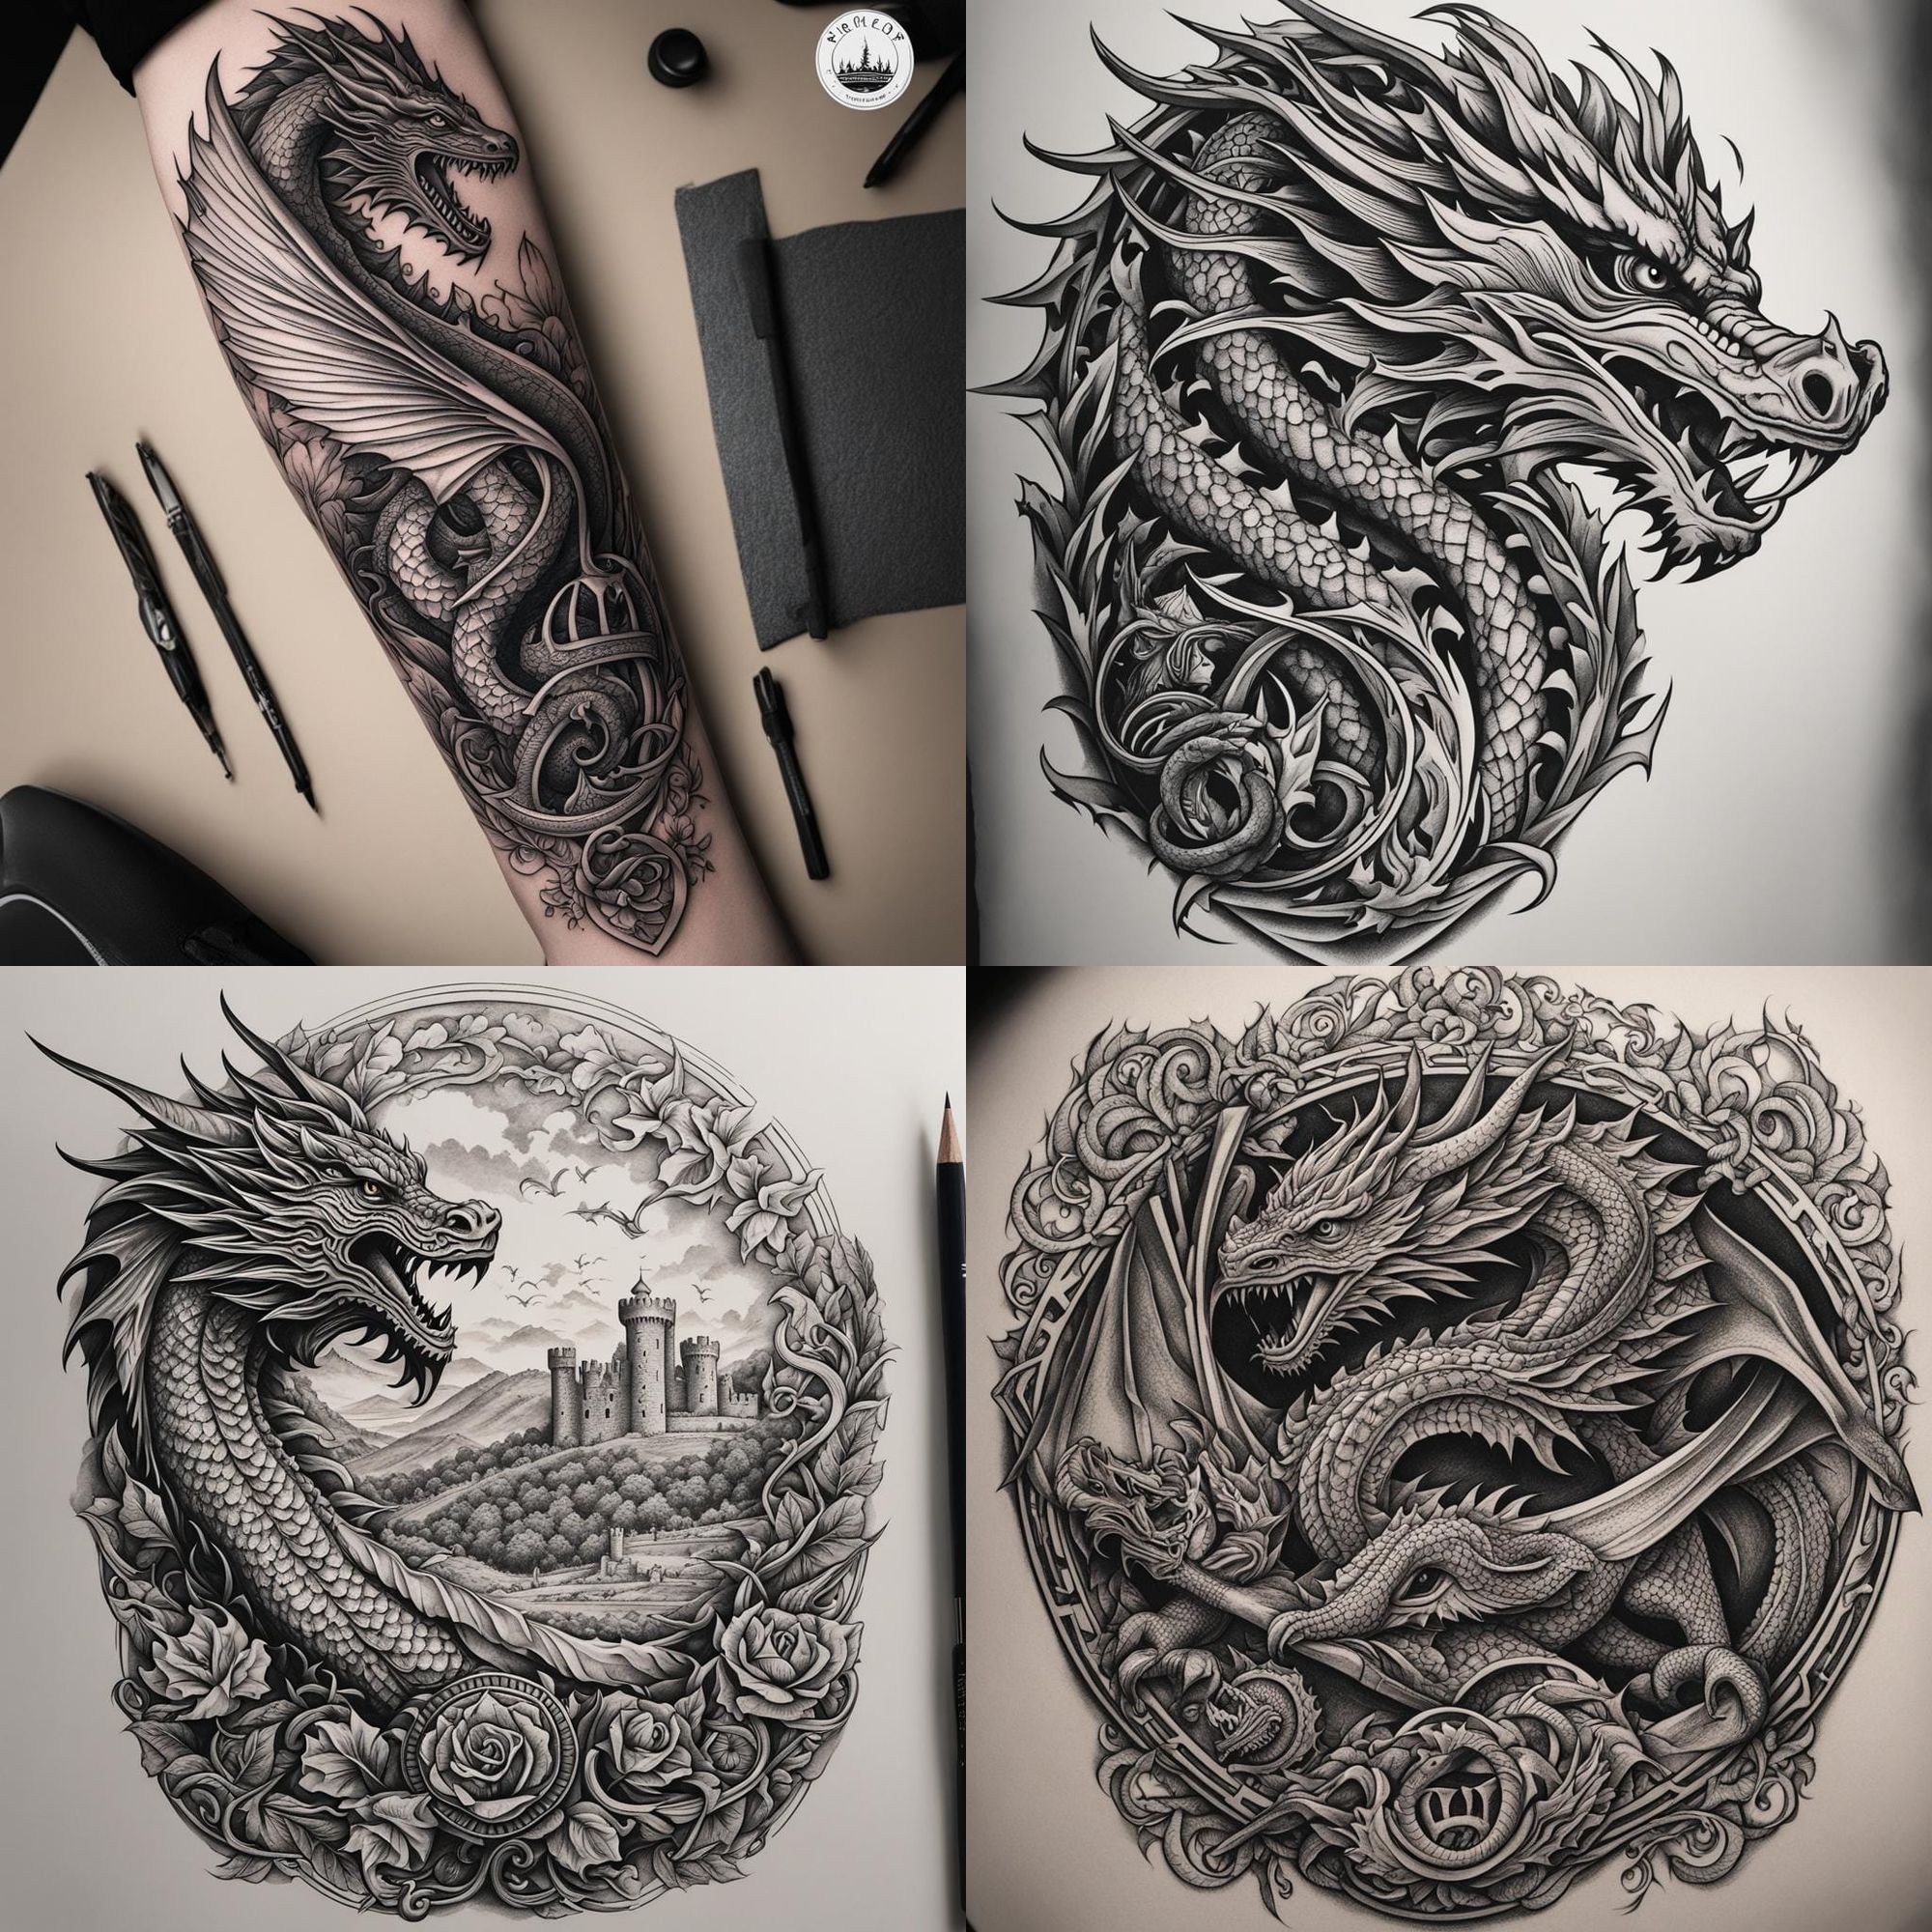 Tattoo World-Creator & Editor by Minh Quyen Chun